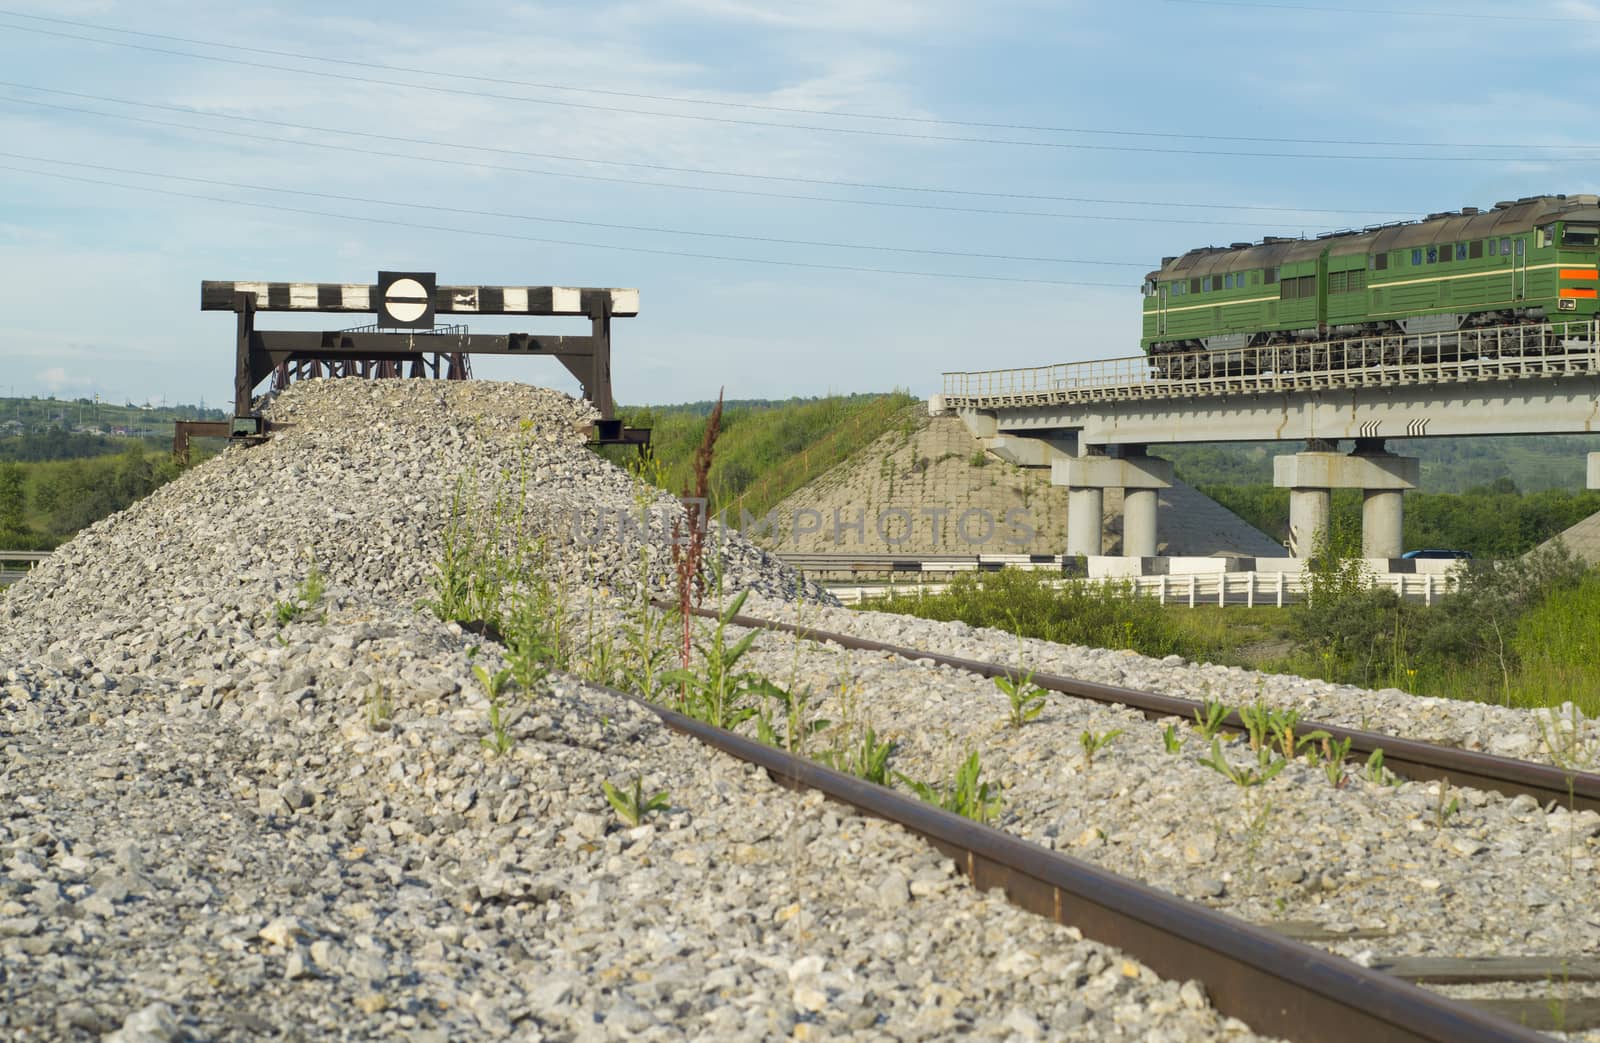 Railway impasse on the railroad tracks by jk3030